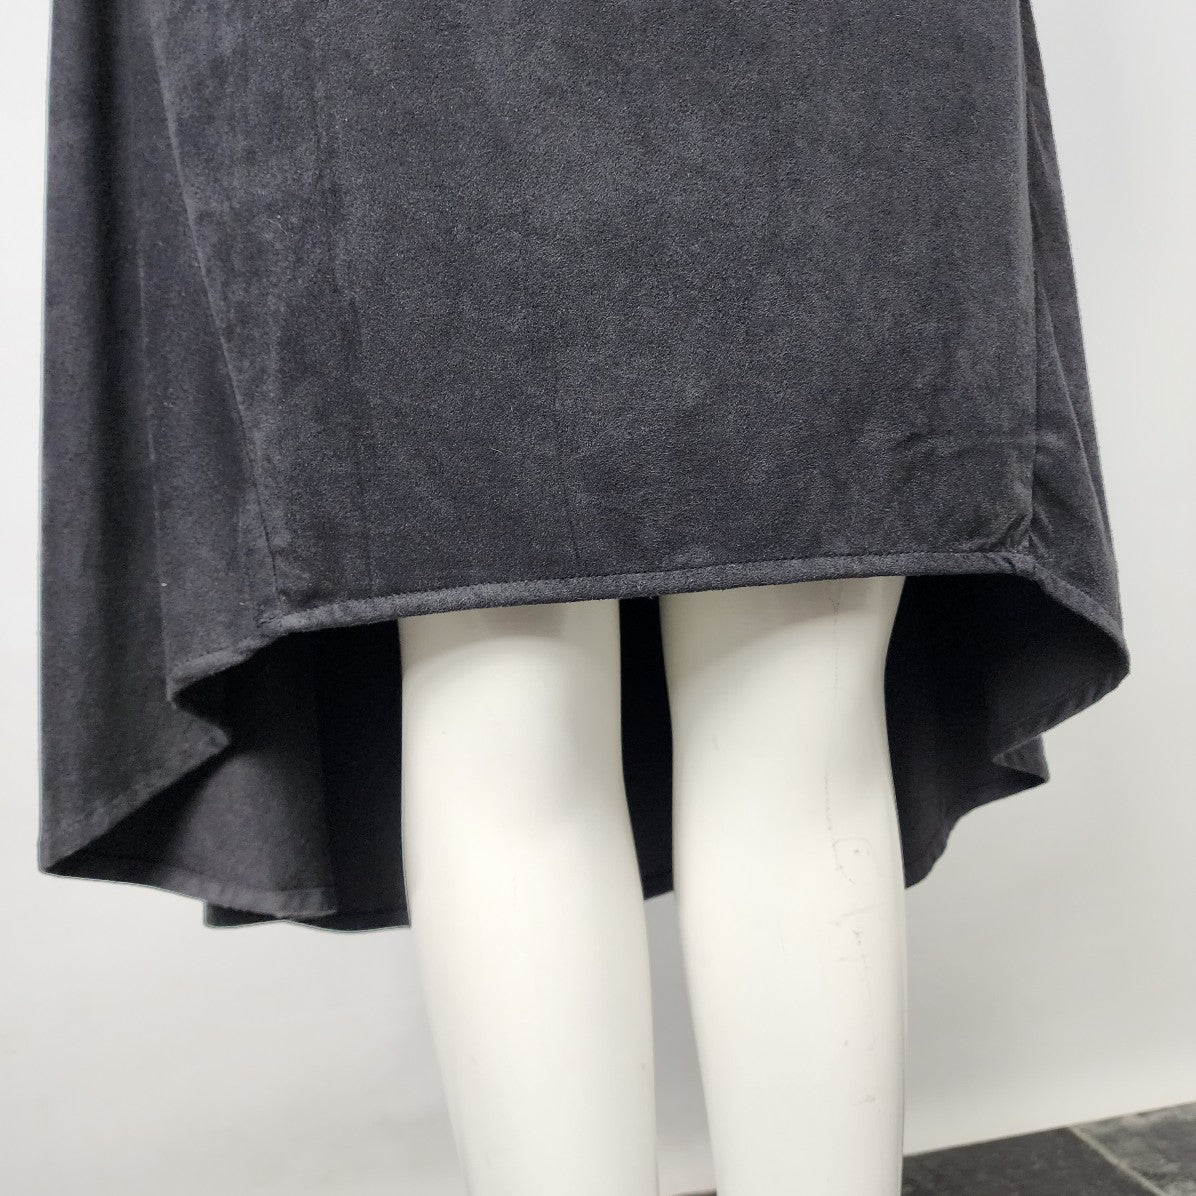 Nounke Black Faux Suede 3/4 Sleeve Dress Size M/L